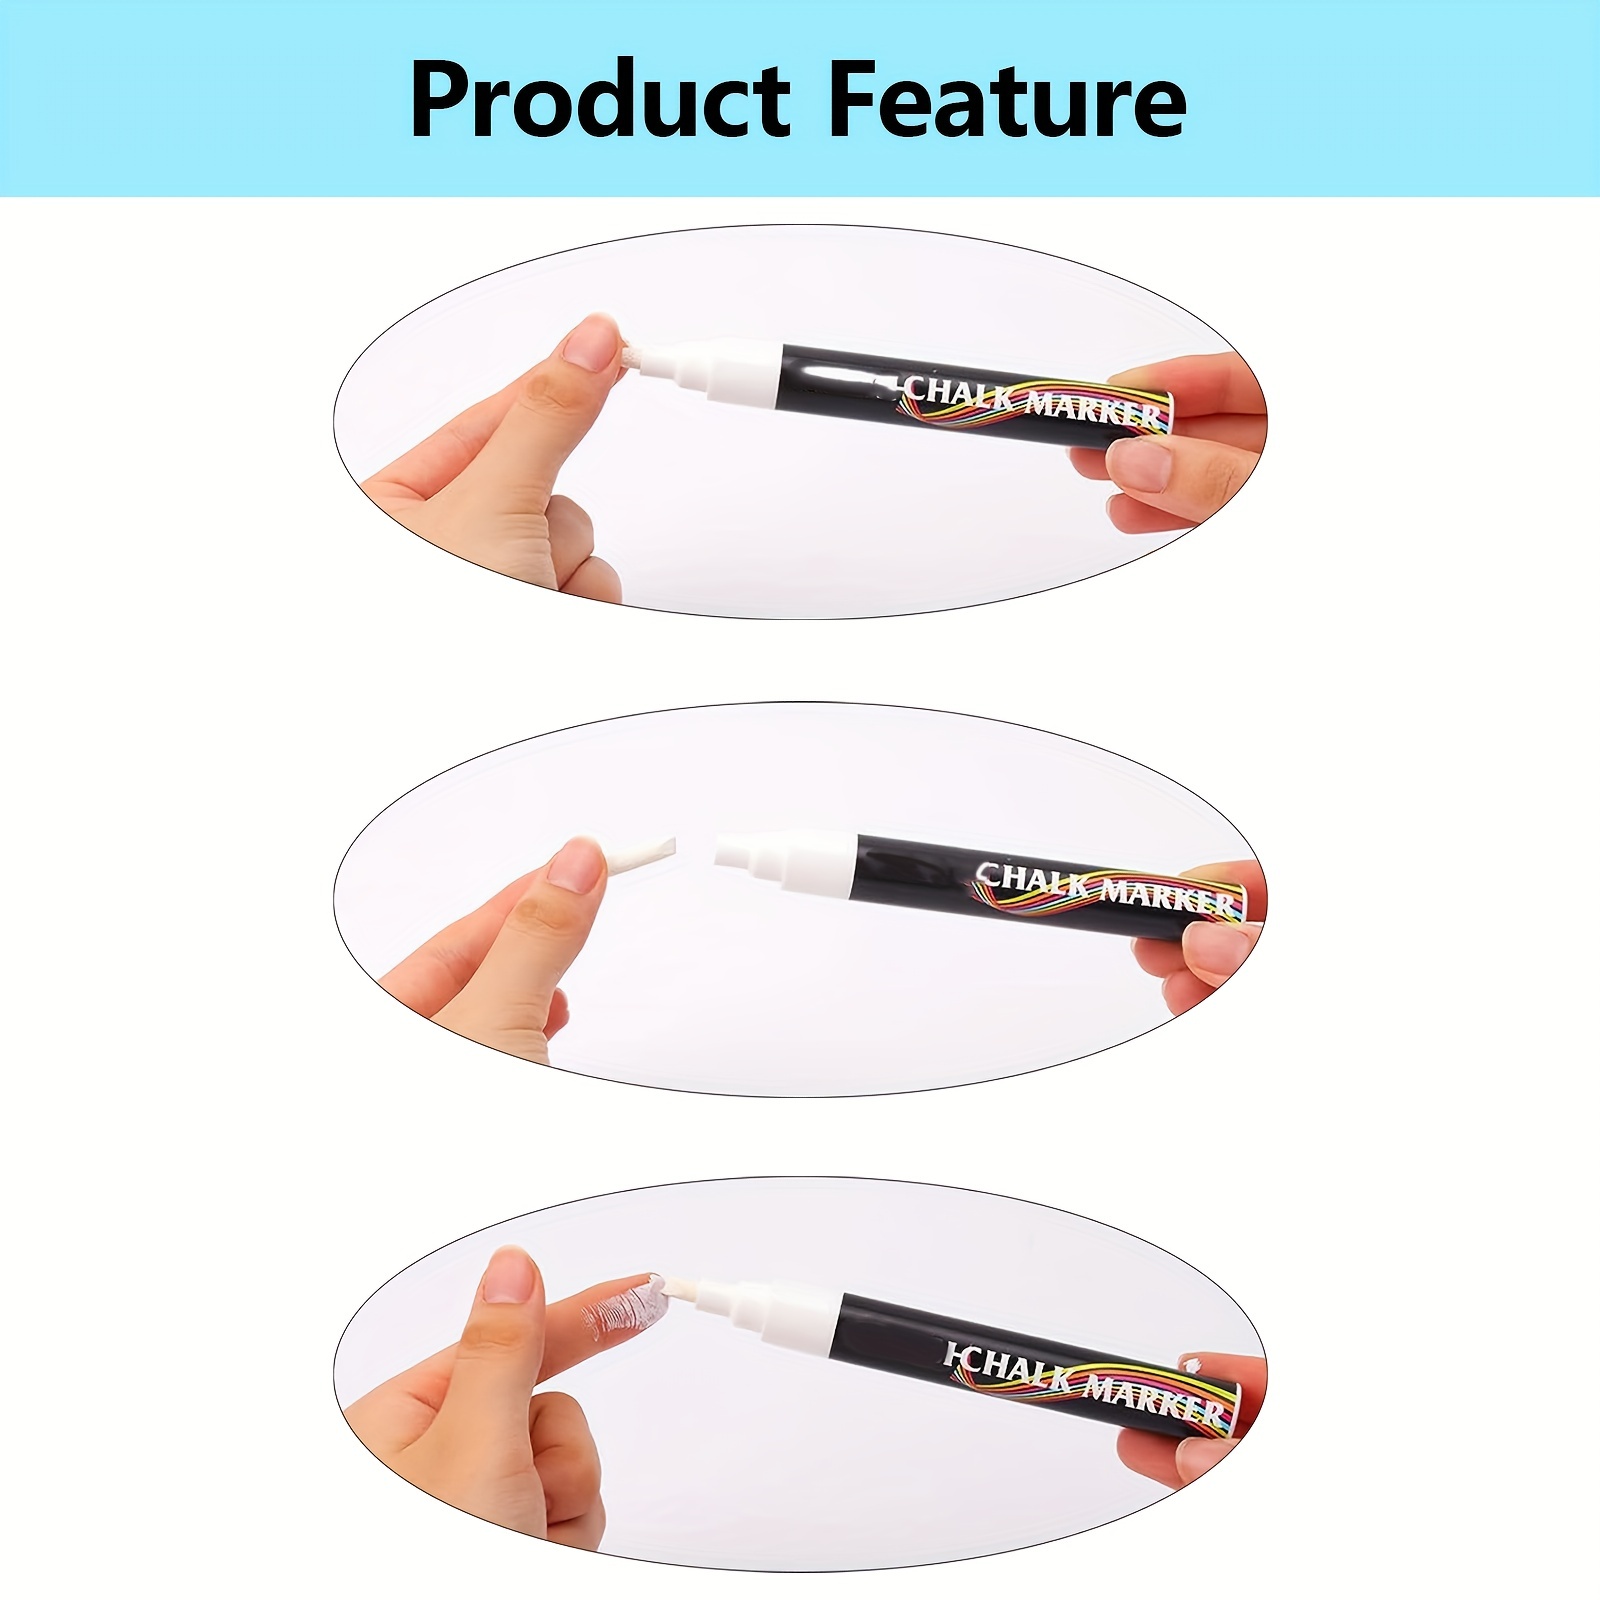 3 X White Liquid Chalk Pen Marker for Glass Windows Chalkboard